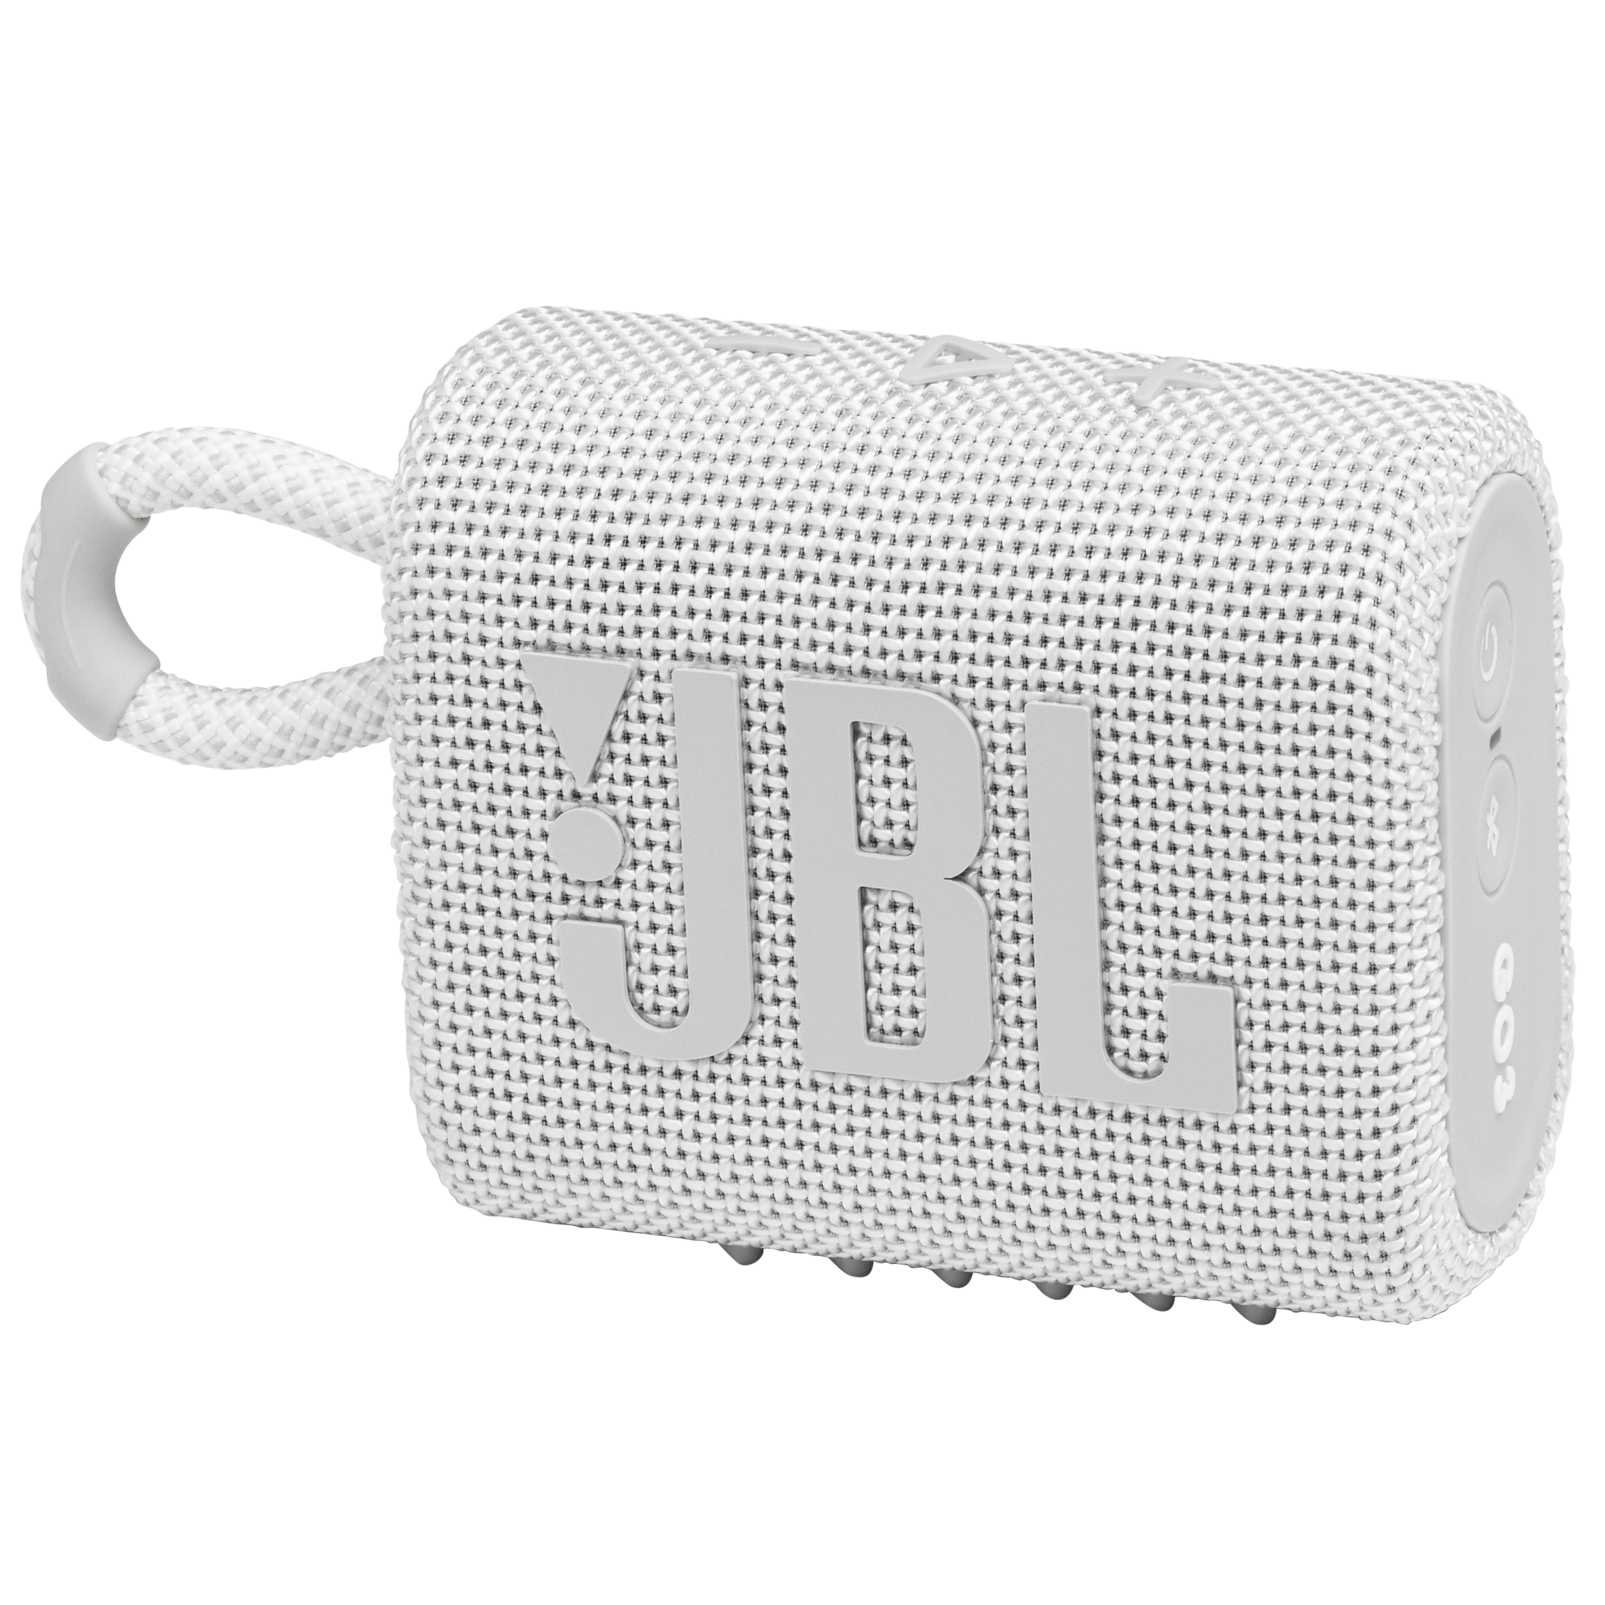 JBL Go 3 - White - Portable Waterproof Speaker - Hero